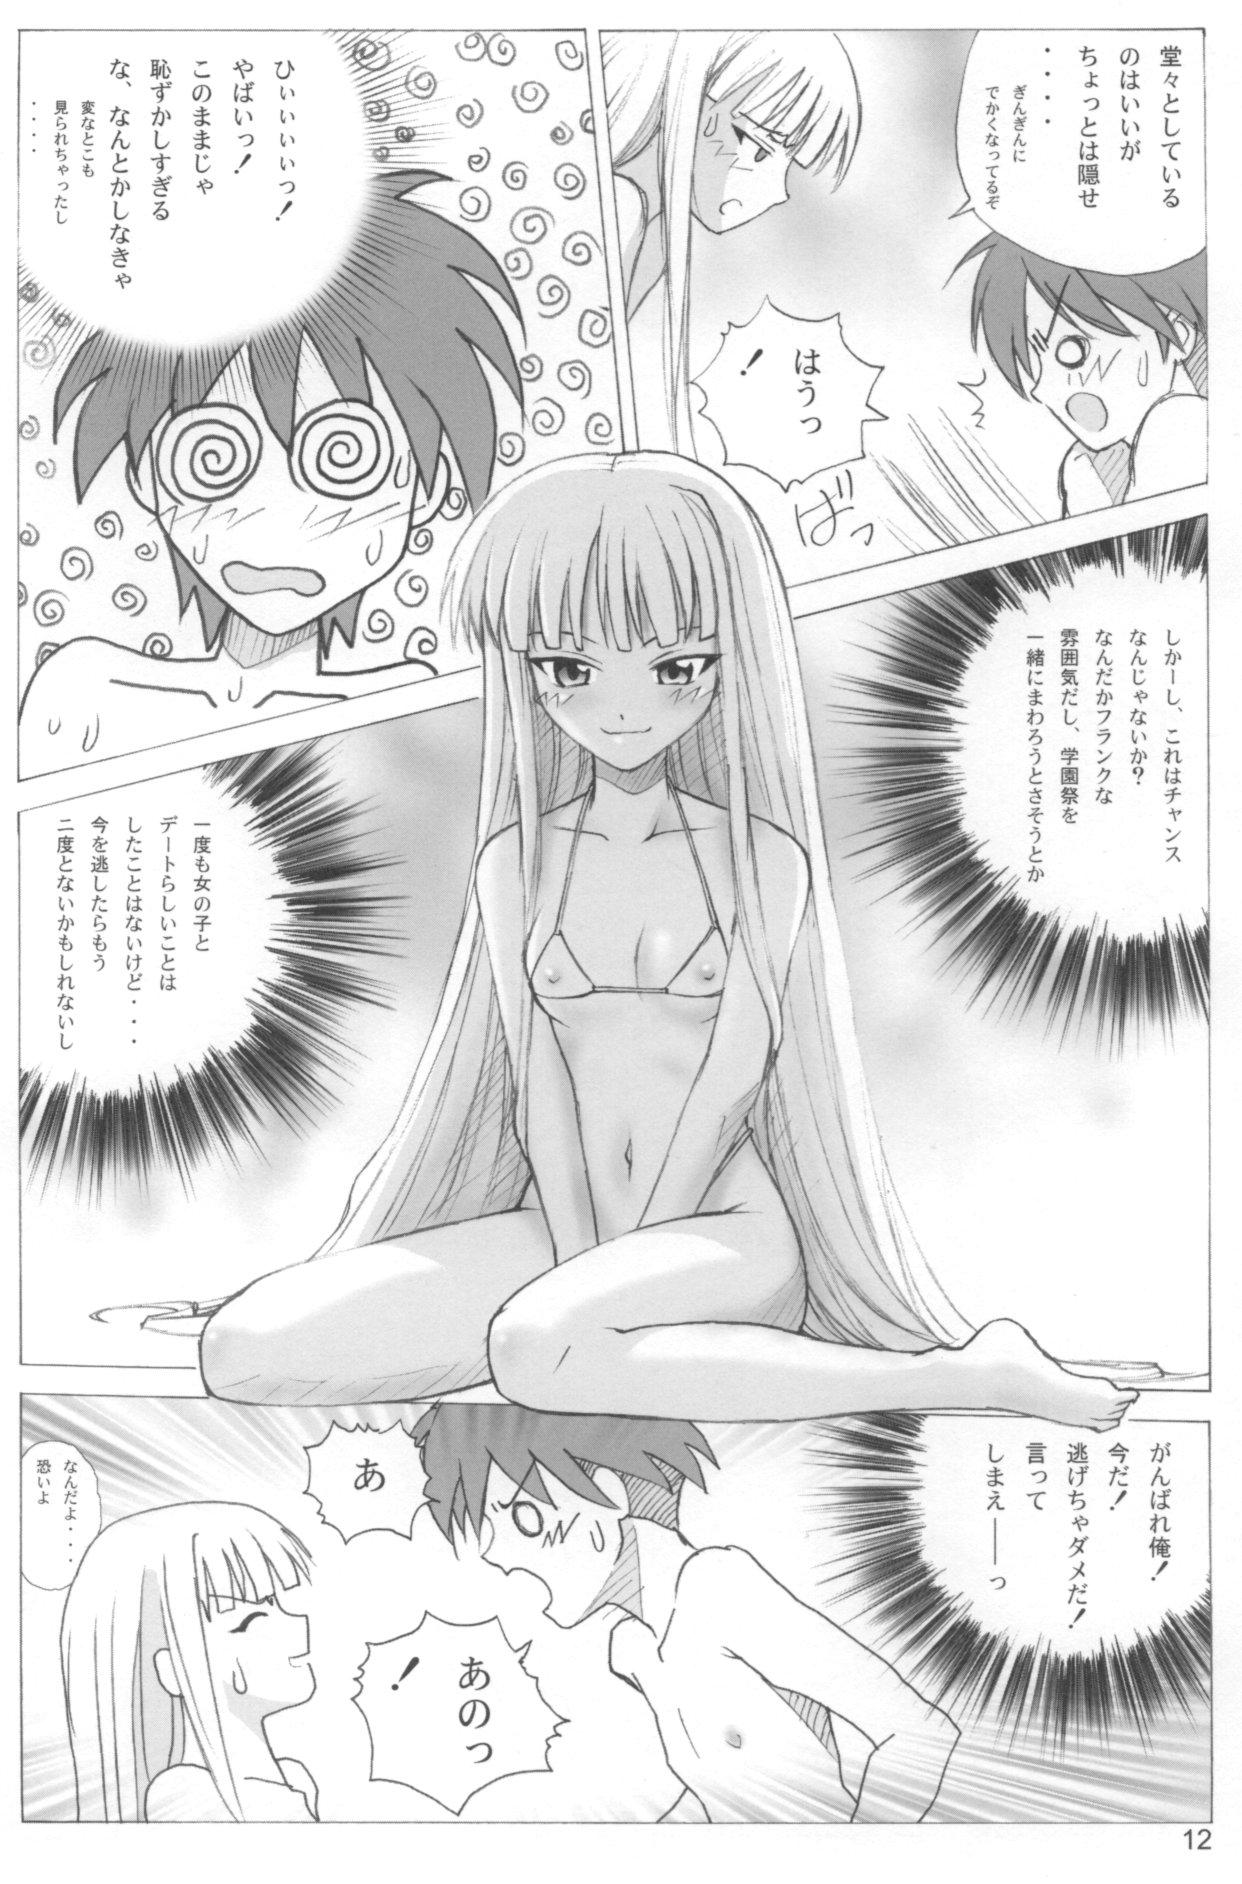 Chibola Evangelica - Mahou sensei negima Body - Page 11